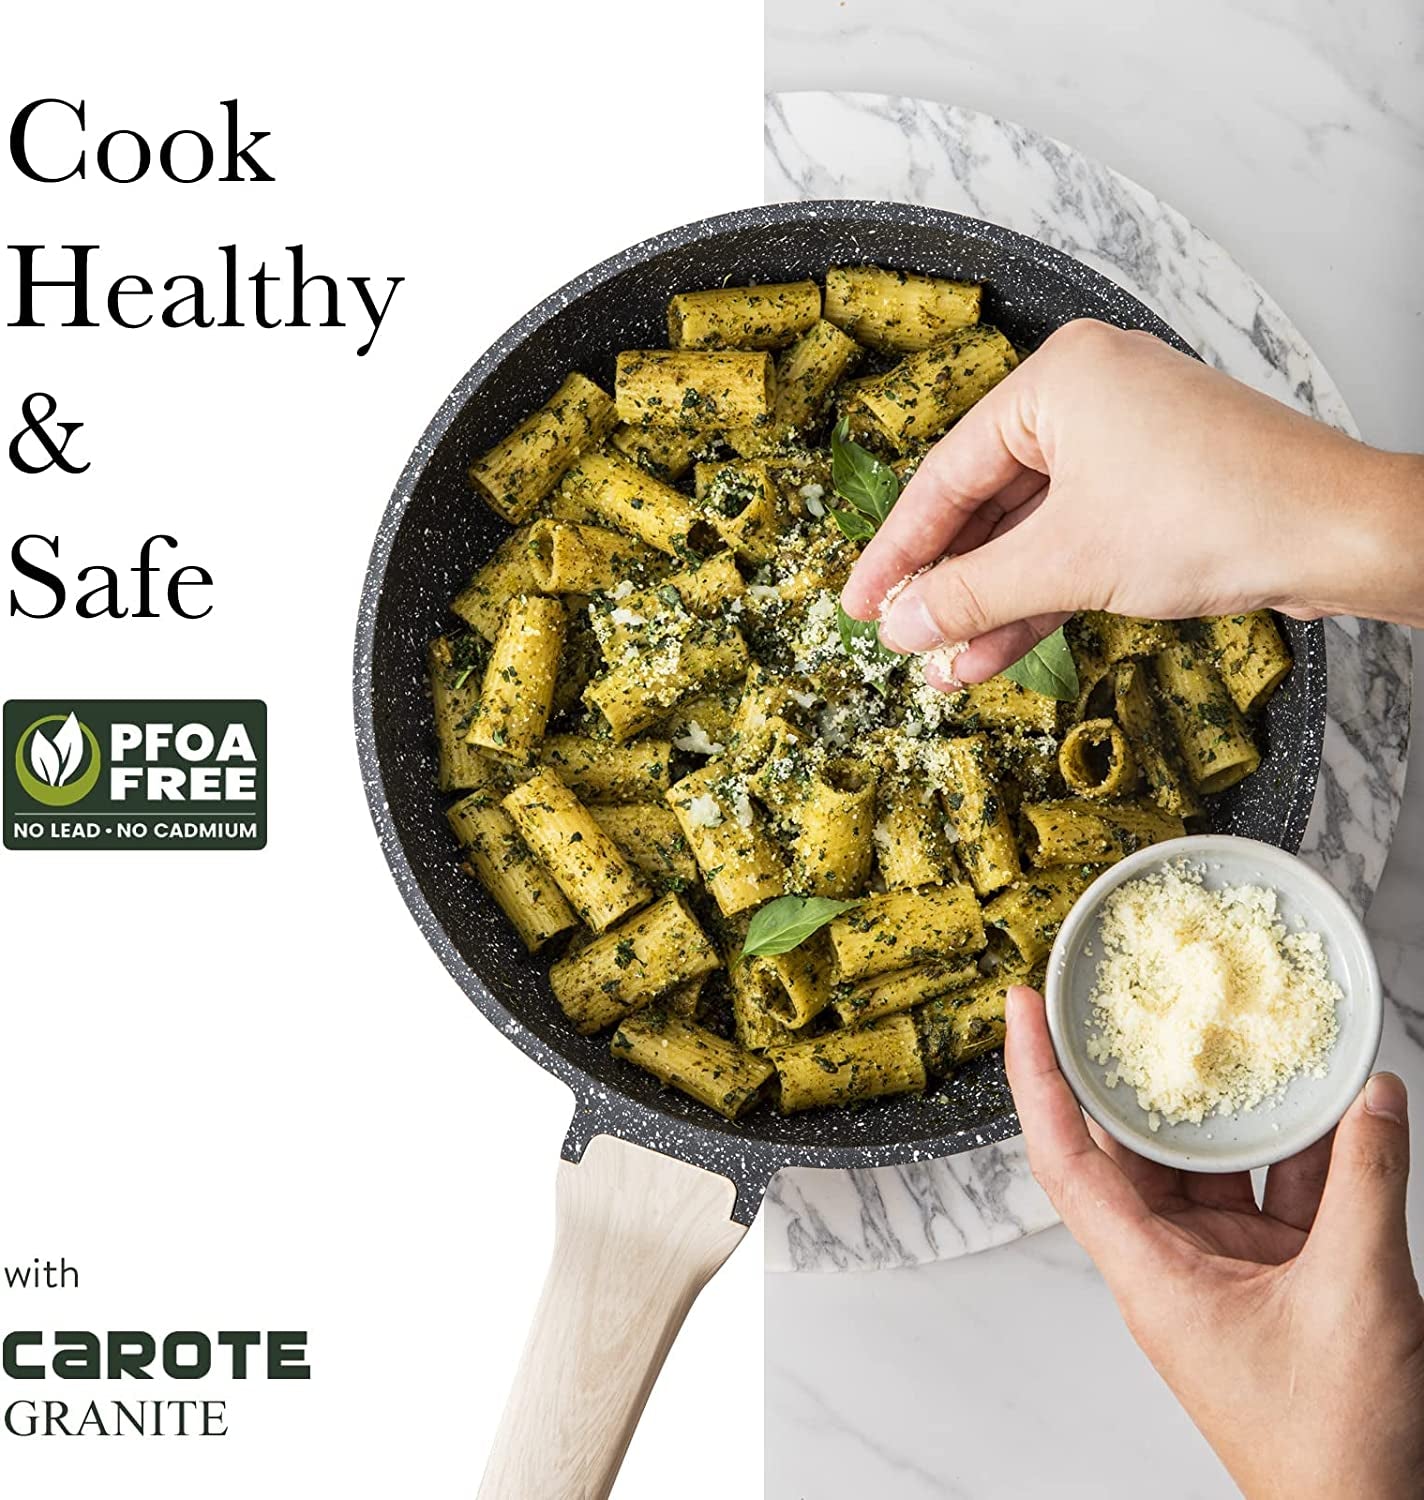 PFOA Free Cookware, No Lead Or Cadmium